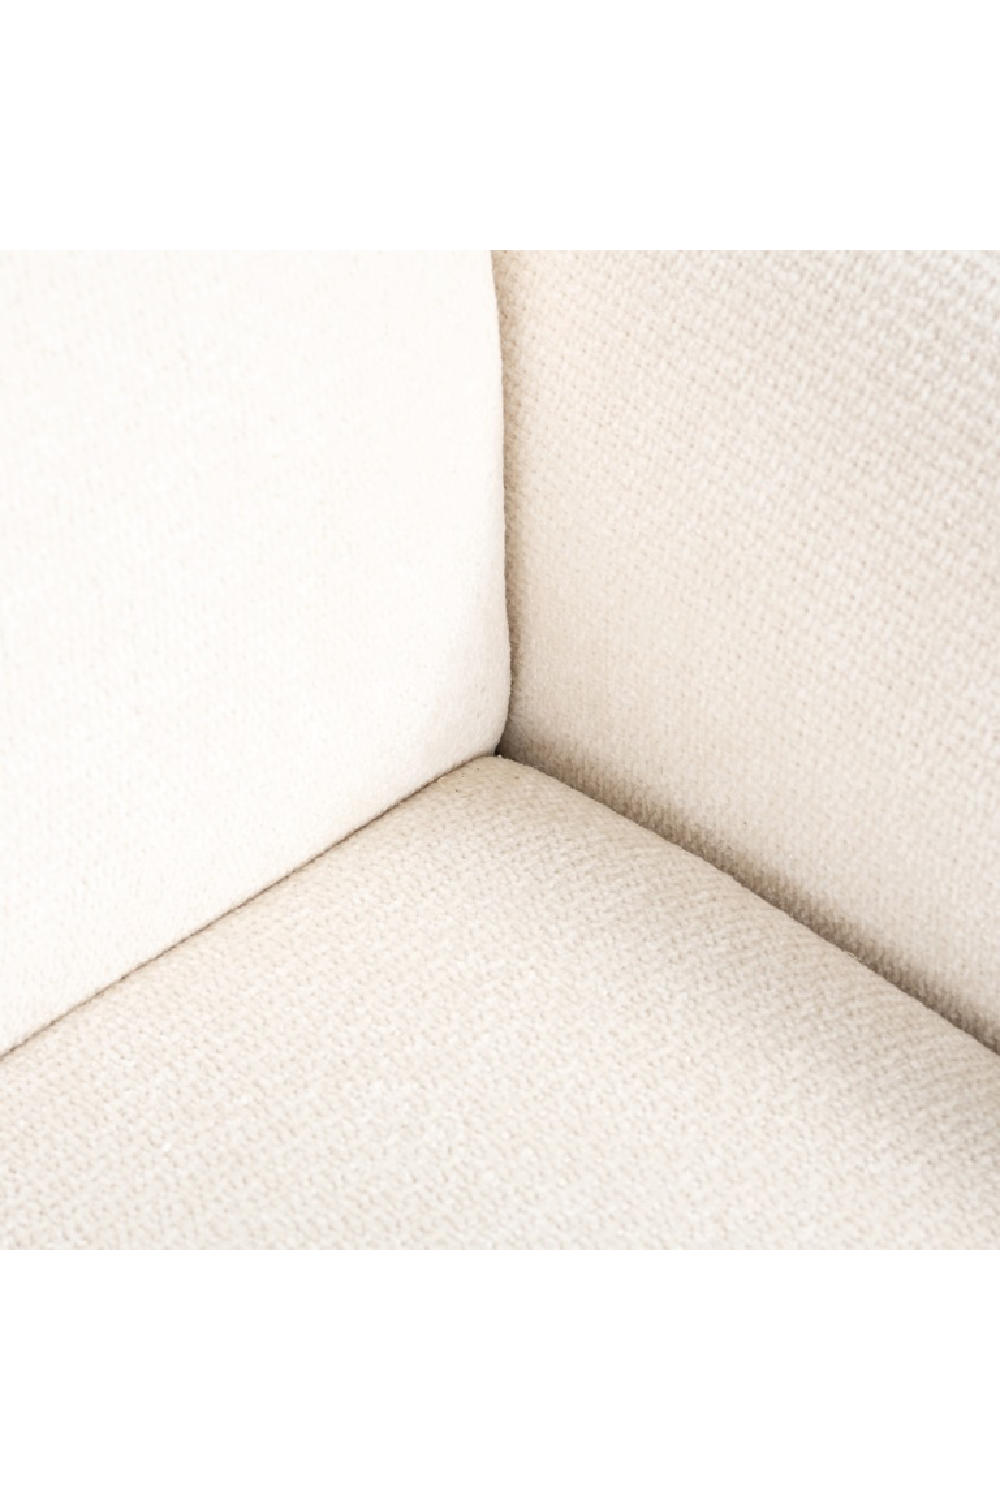 White Modern Easy Chair | OROA Boli | Oroa.com